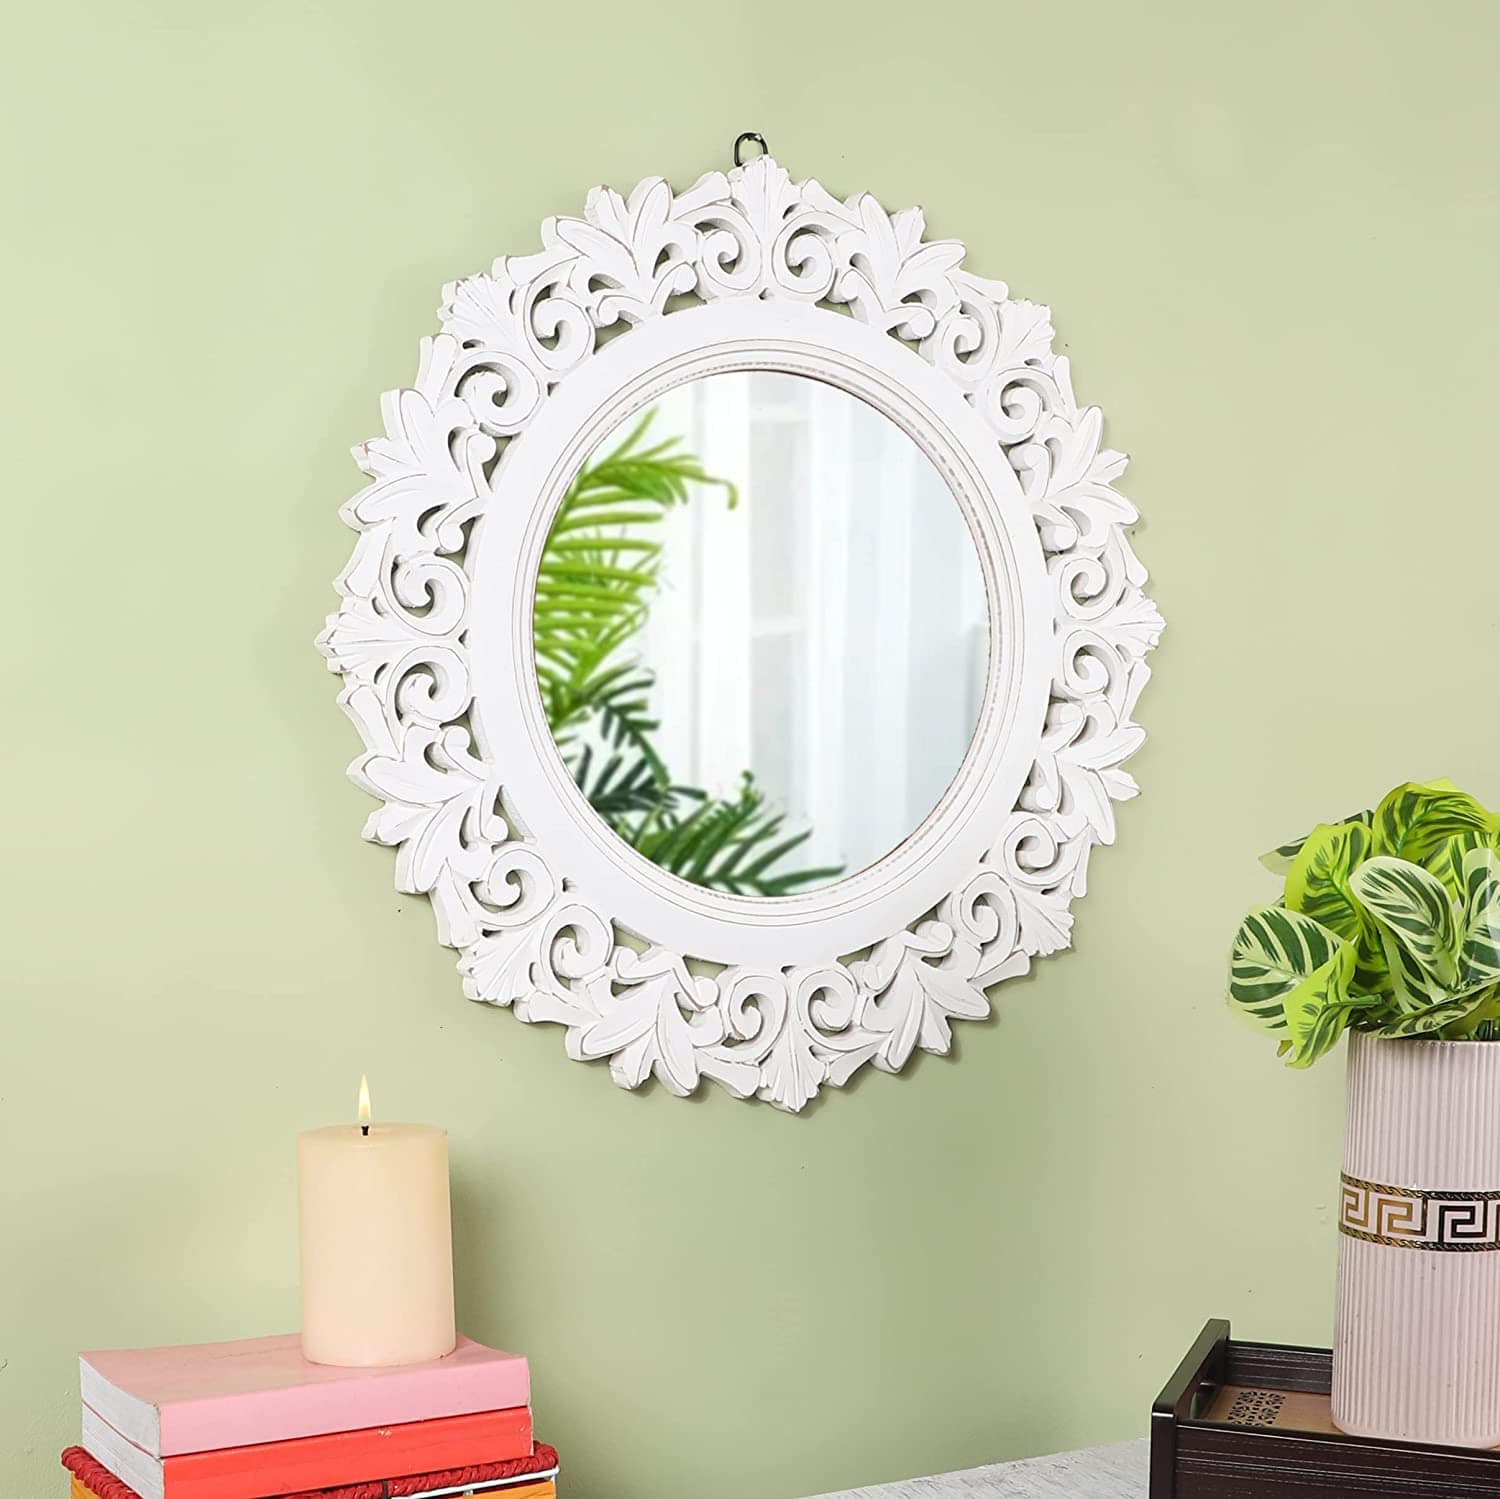 Decorative Wall Mirror for Bathroom, Living Room, White, AHMR71, 50 cm x 50 cm x 2 cm